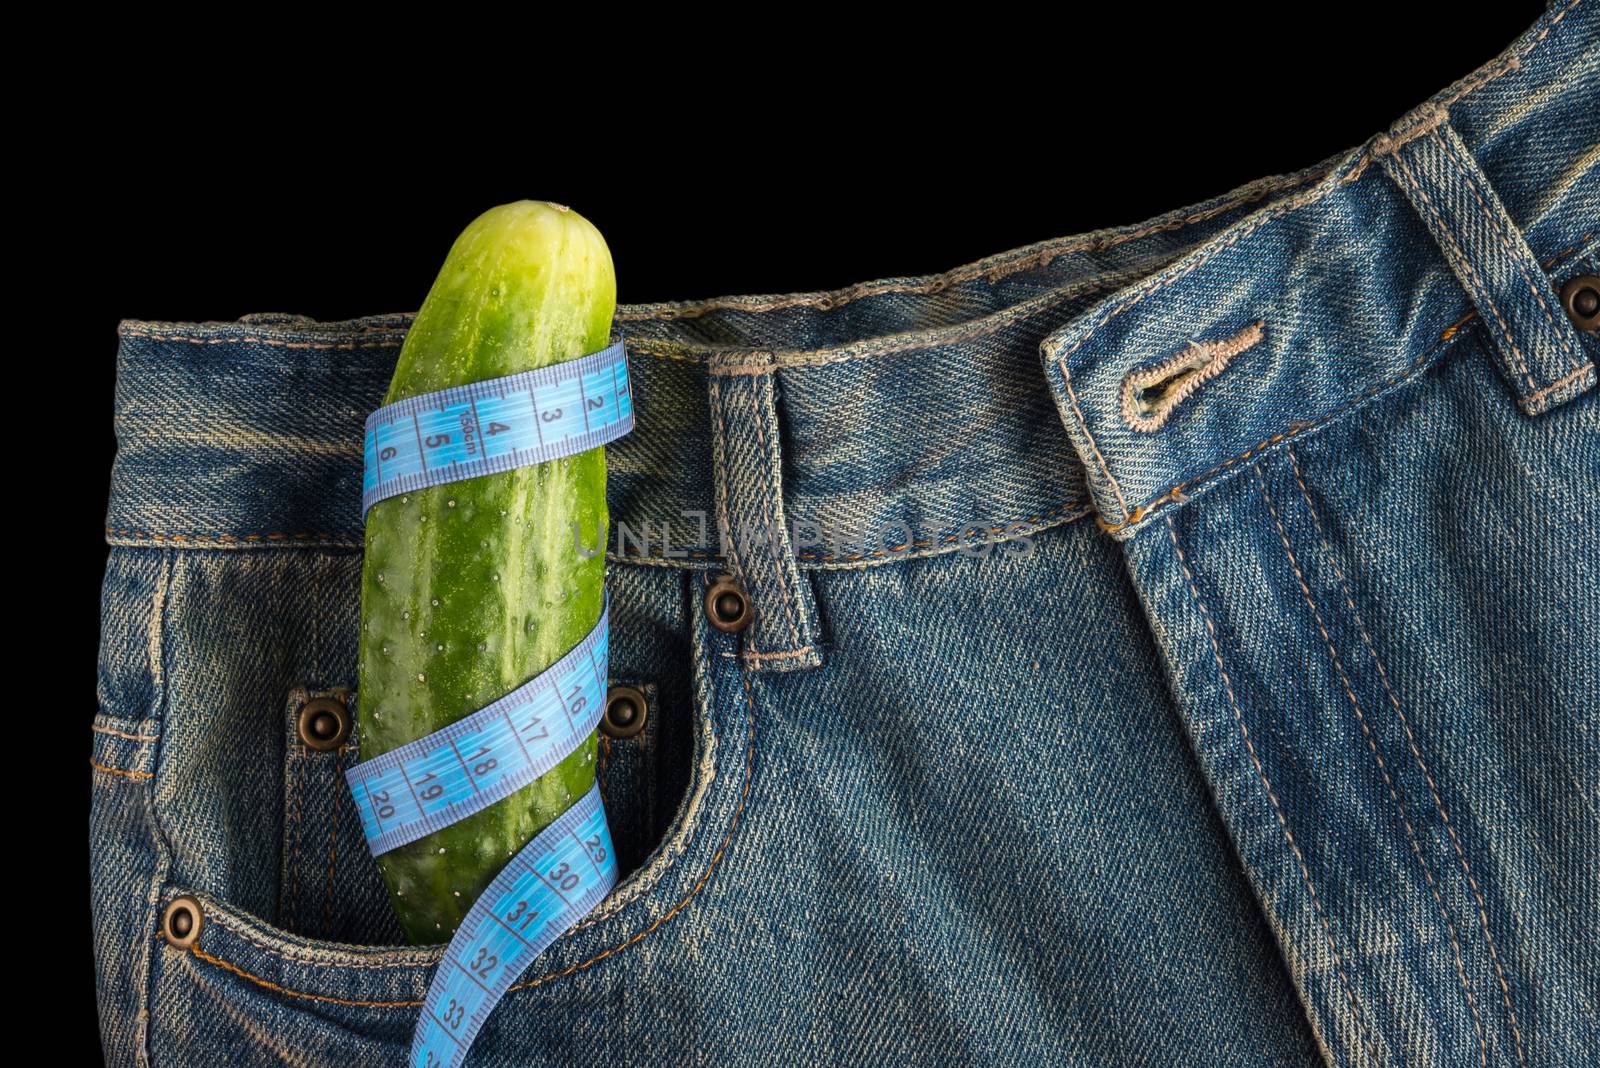 Big cucumber like penis in men's jeans by iprachenko